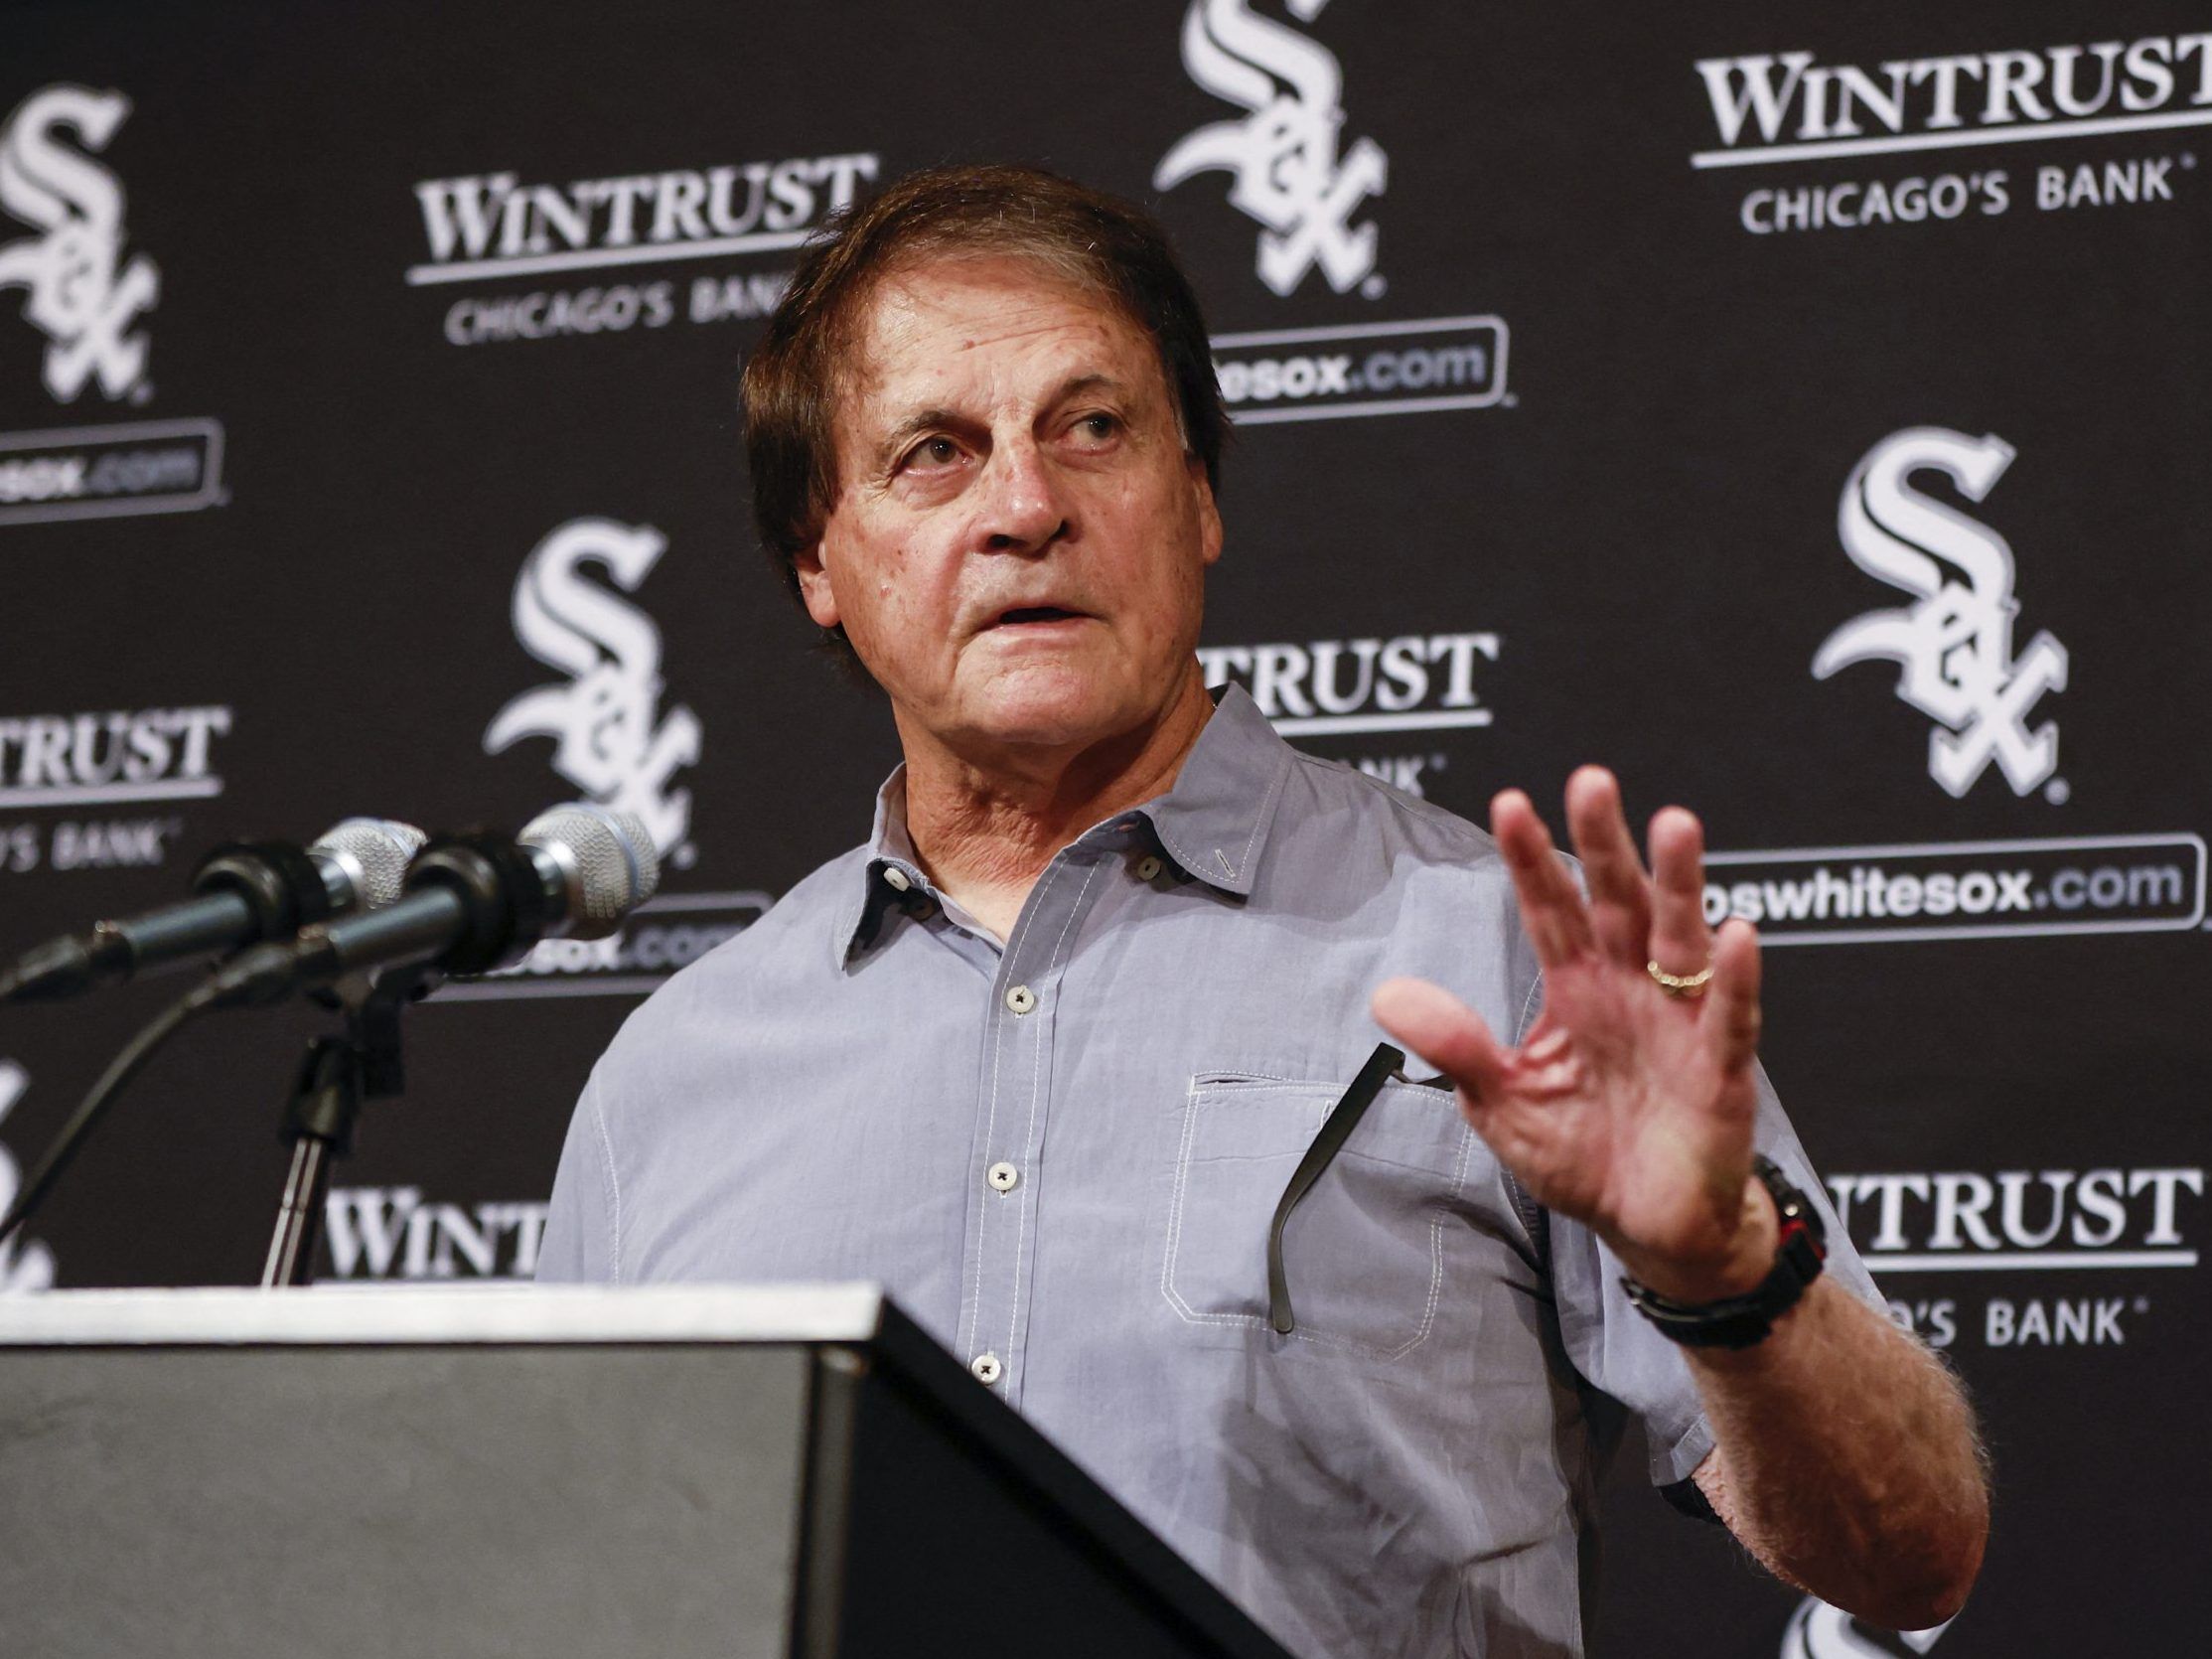 White Sox' Tony La Russa: 'I did not do my job' - Chicago Sun-Times